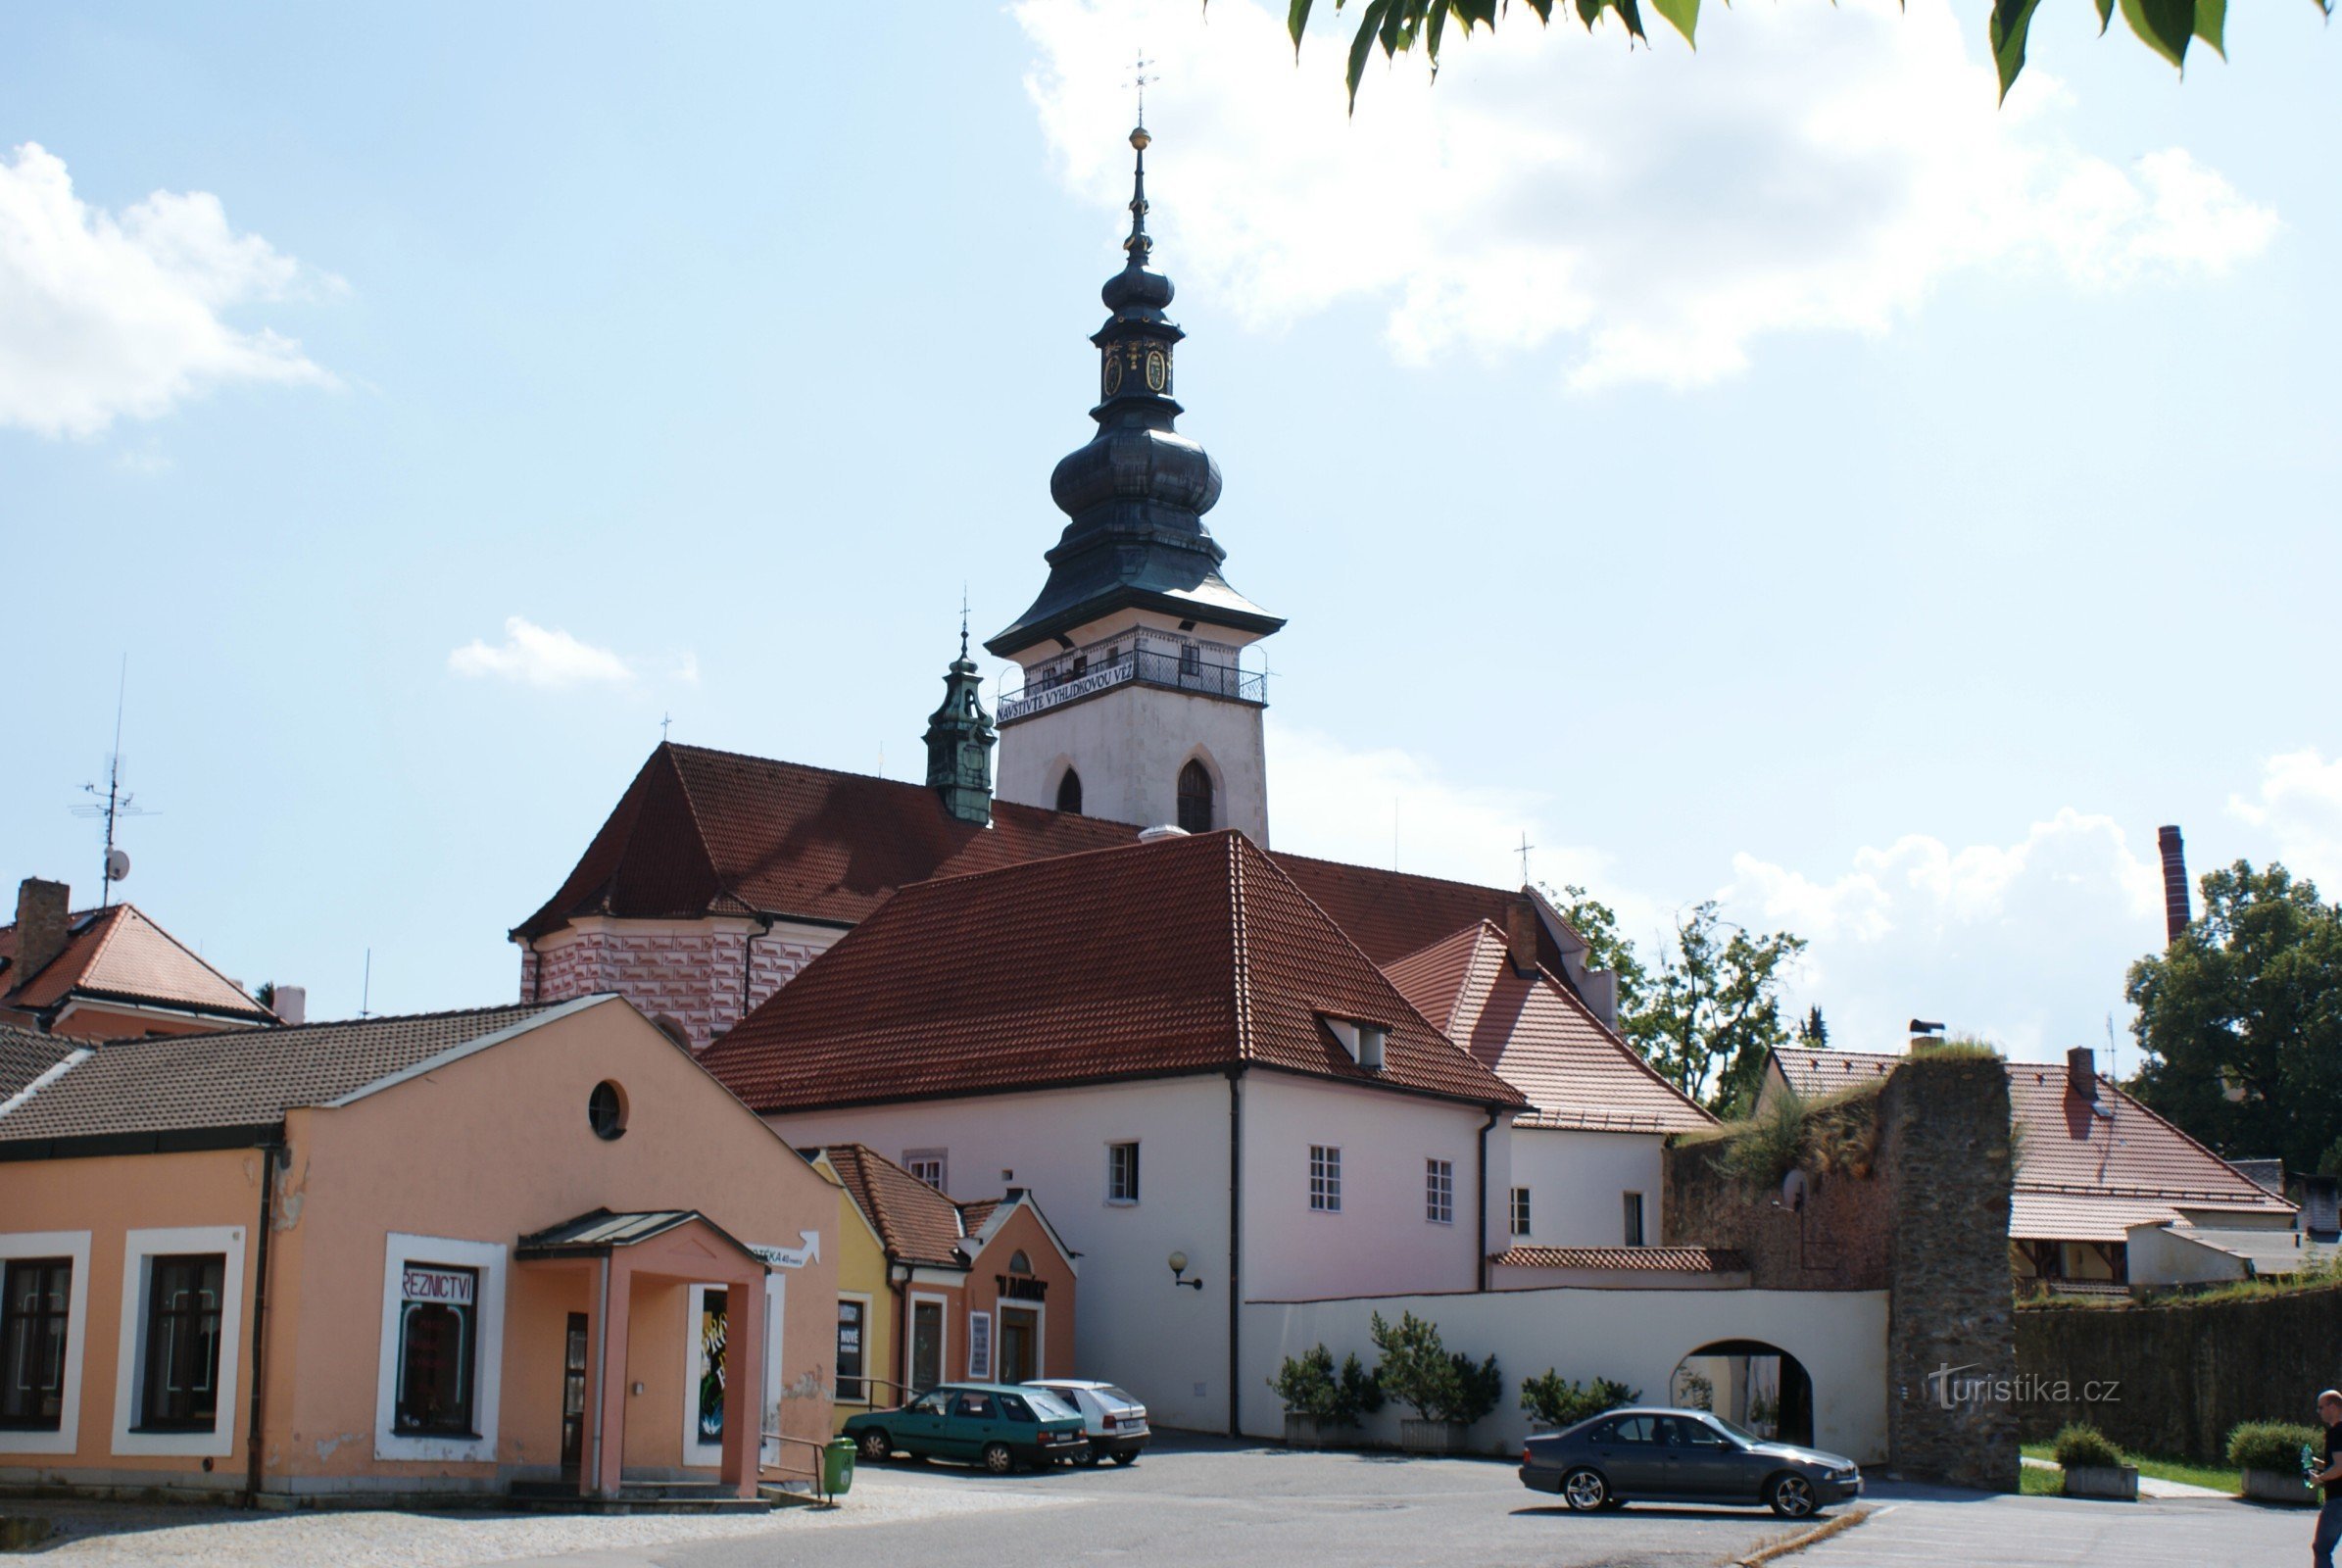 Pelhřimov – Basilikan St. Bartolomeus med ett utsiktstorn